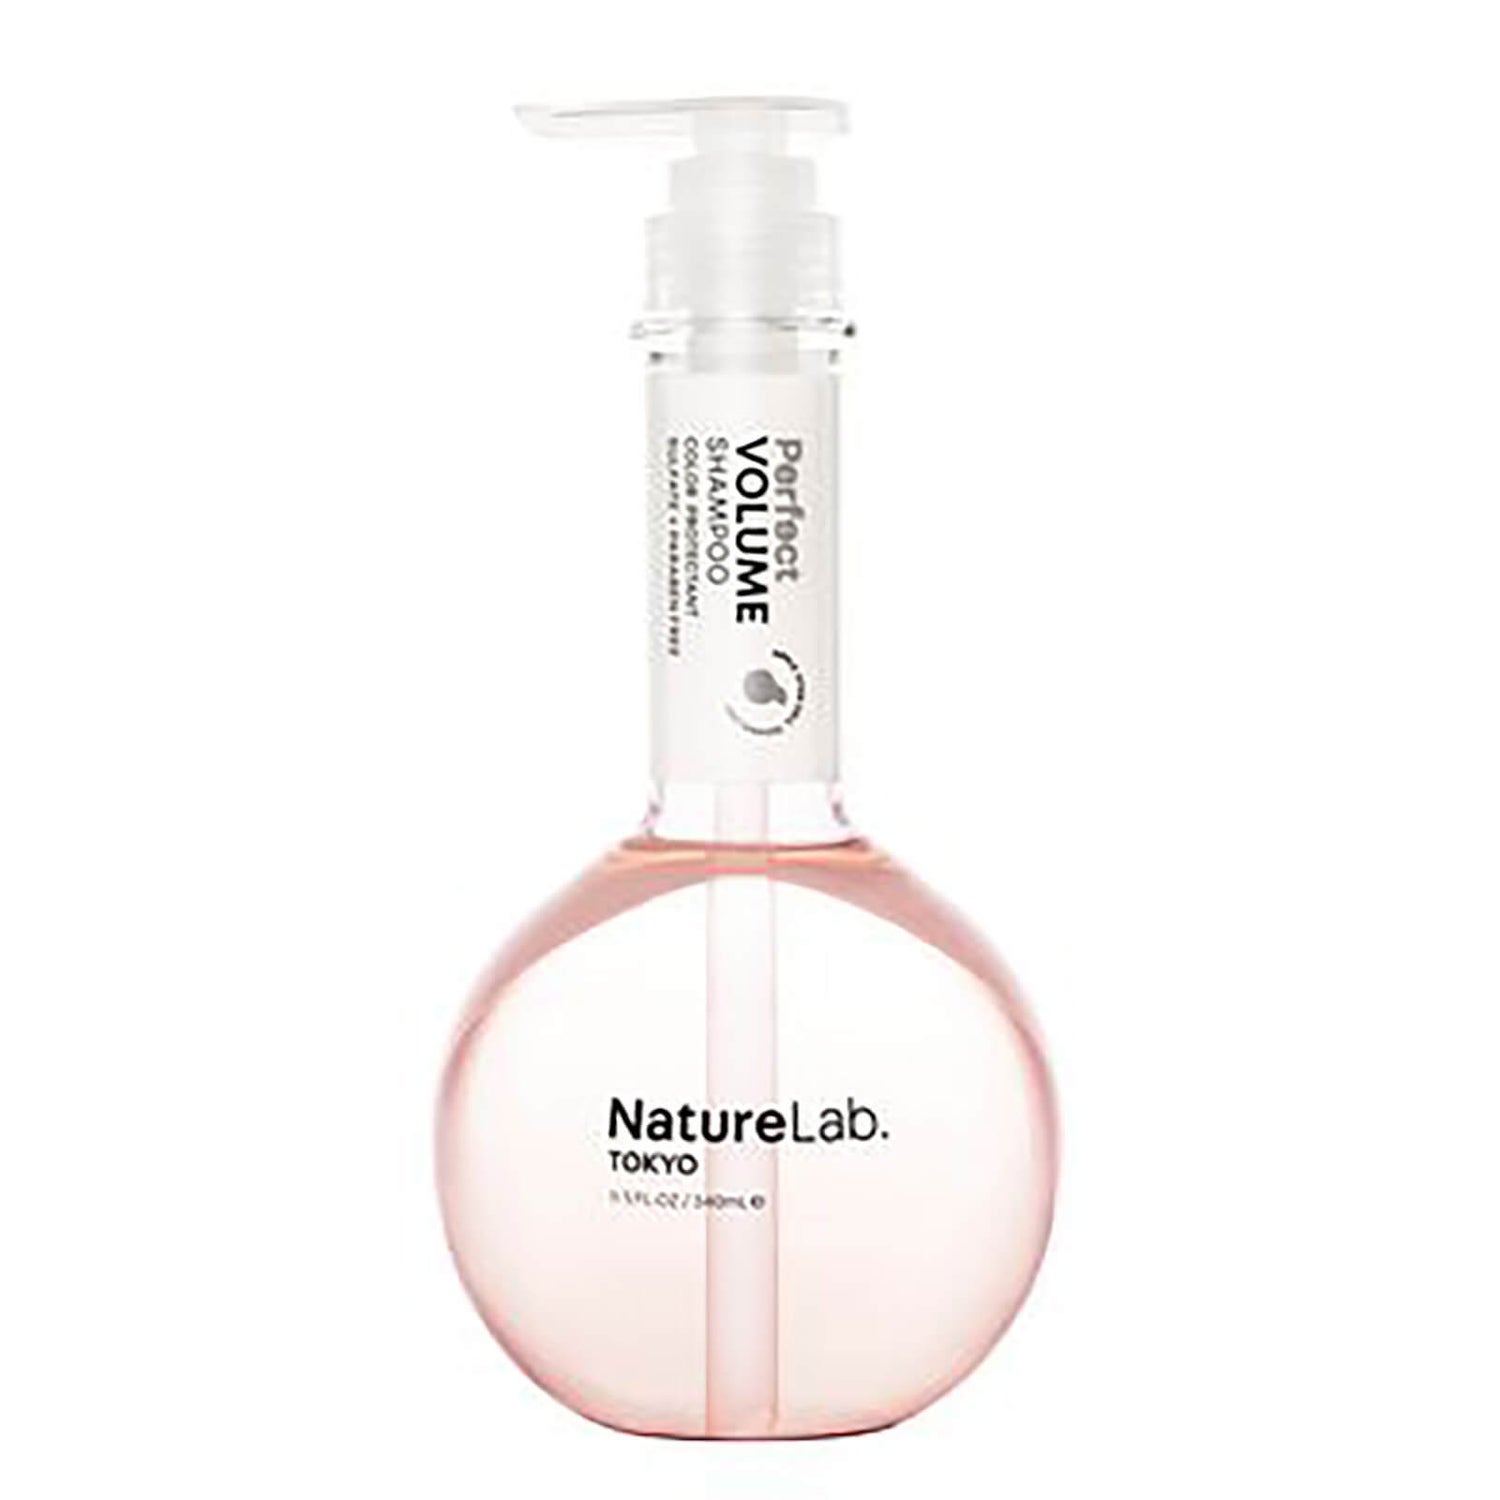 NatureLab TOKYO Perfect Volume Shampoo